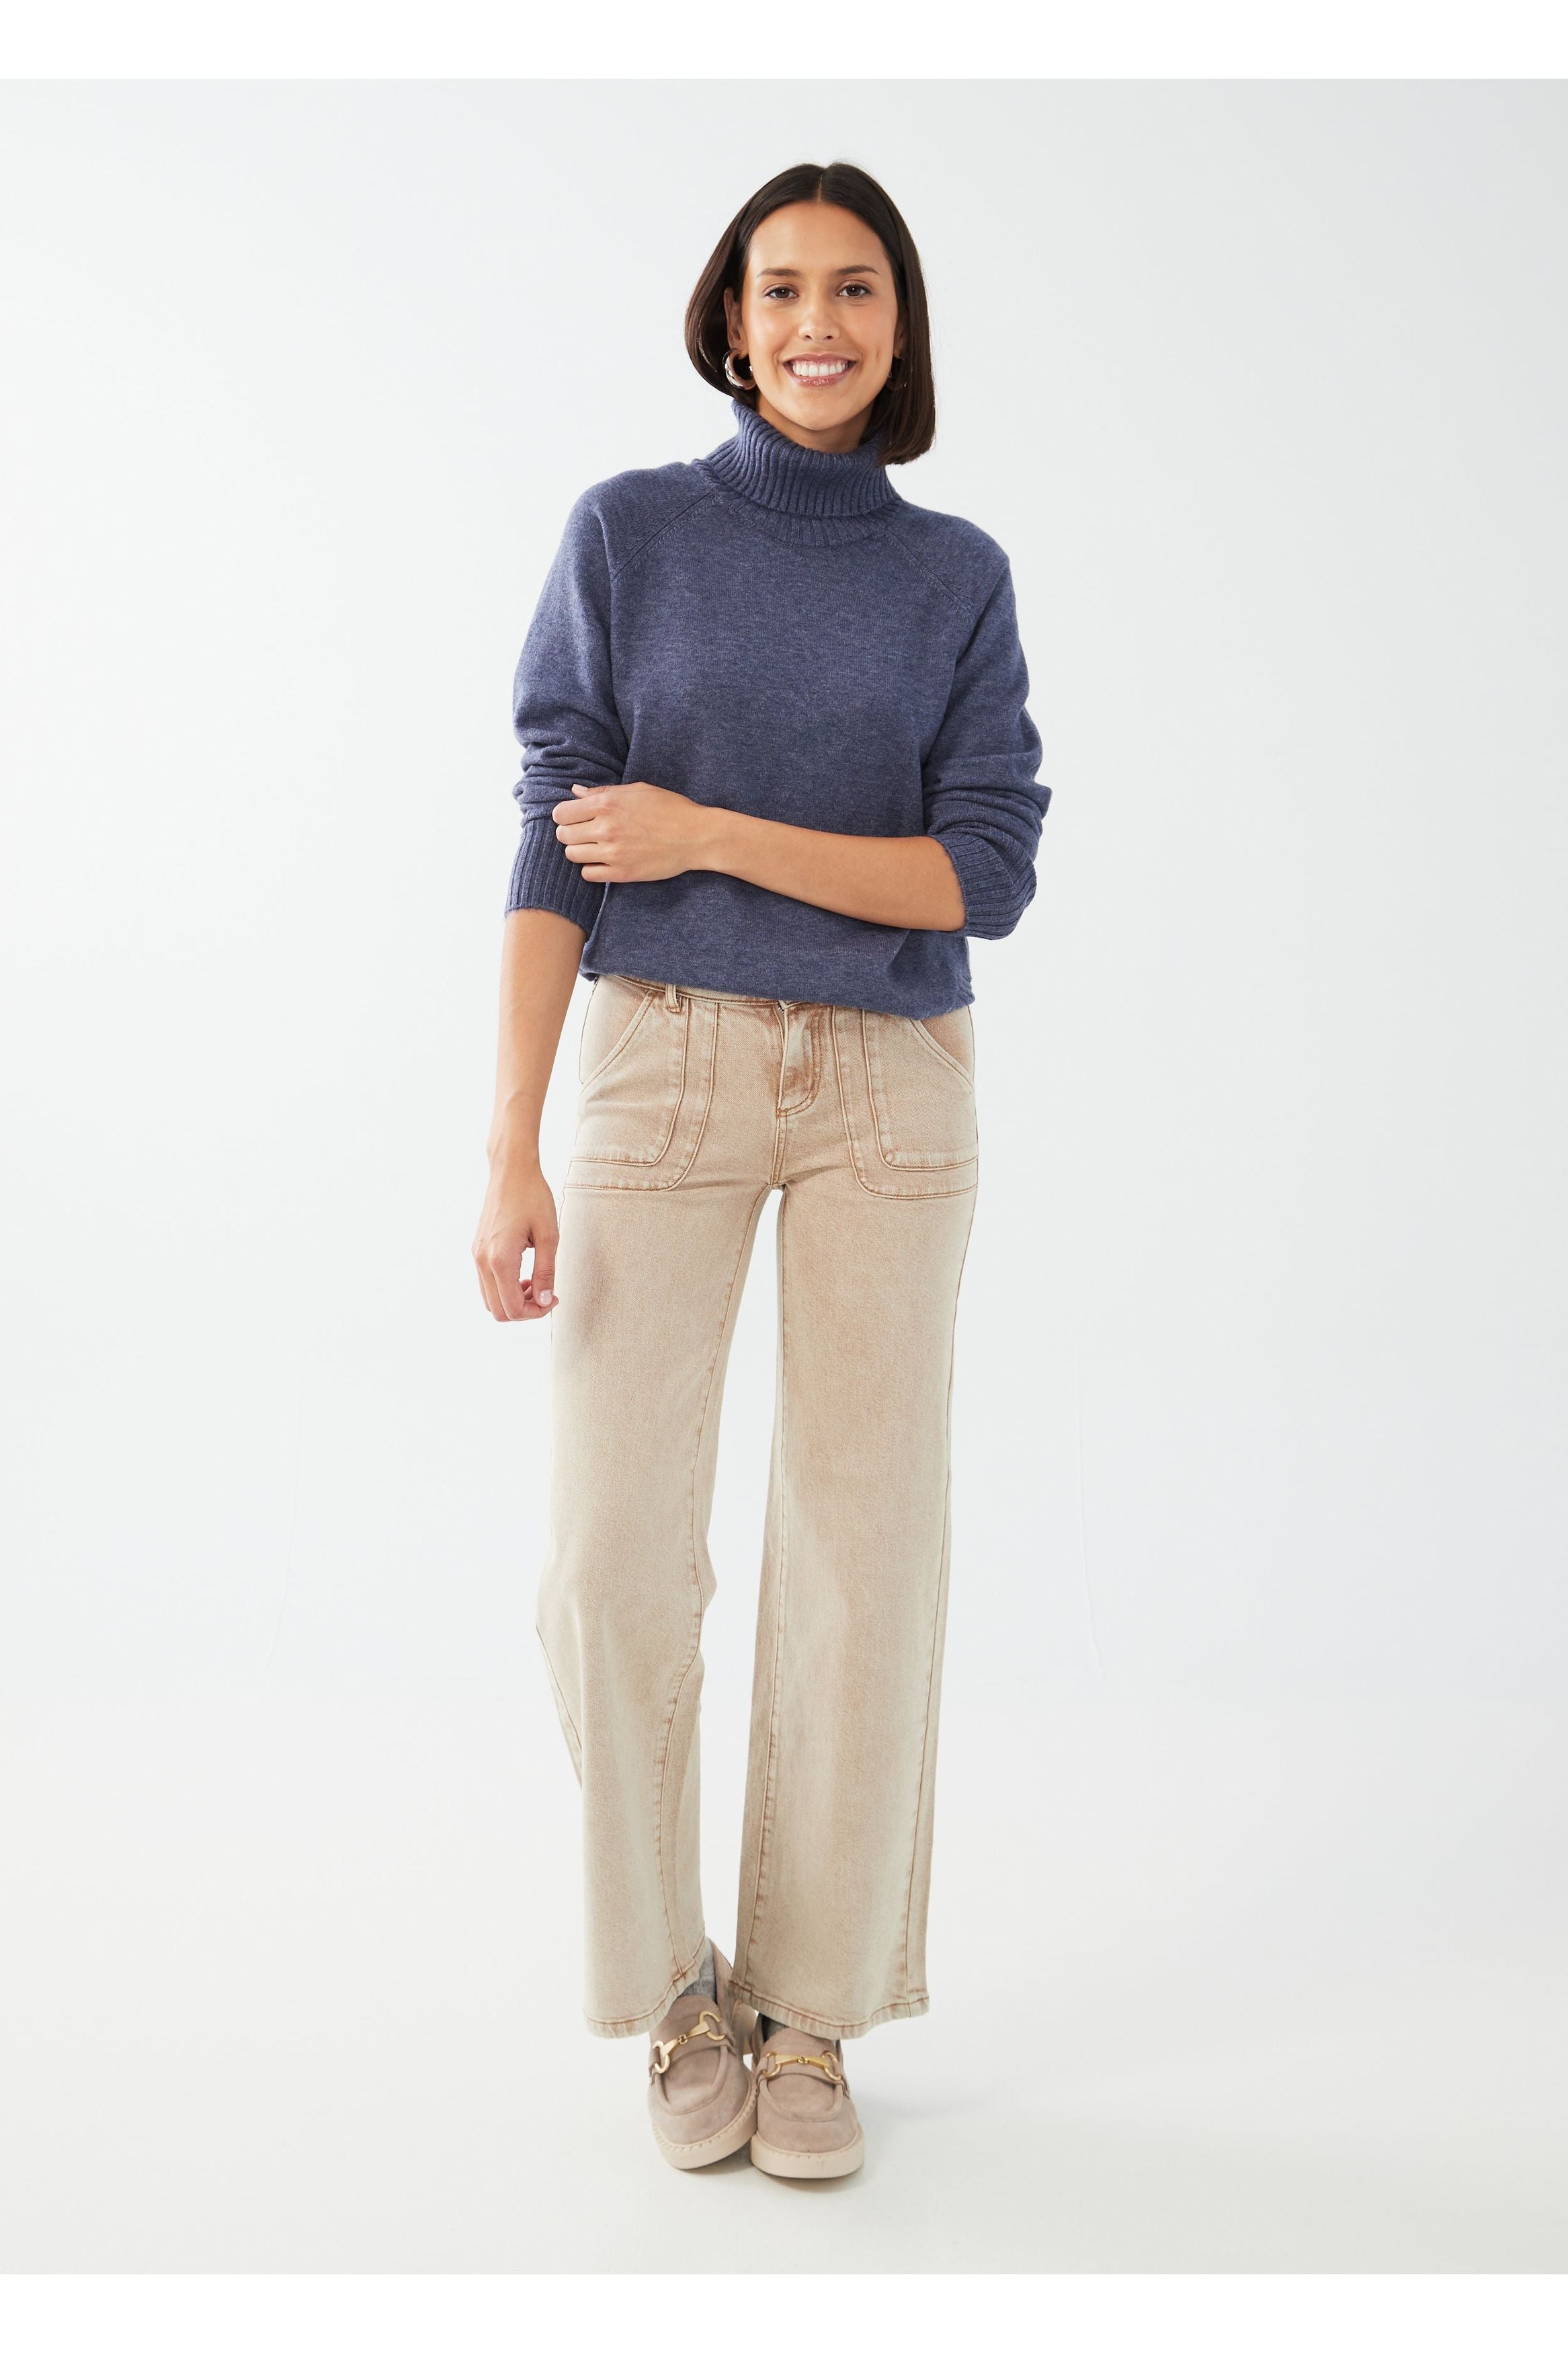 FDJ Turtleneck Shirttail Hem Sweater - Style 1515333, front2, indigo